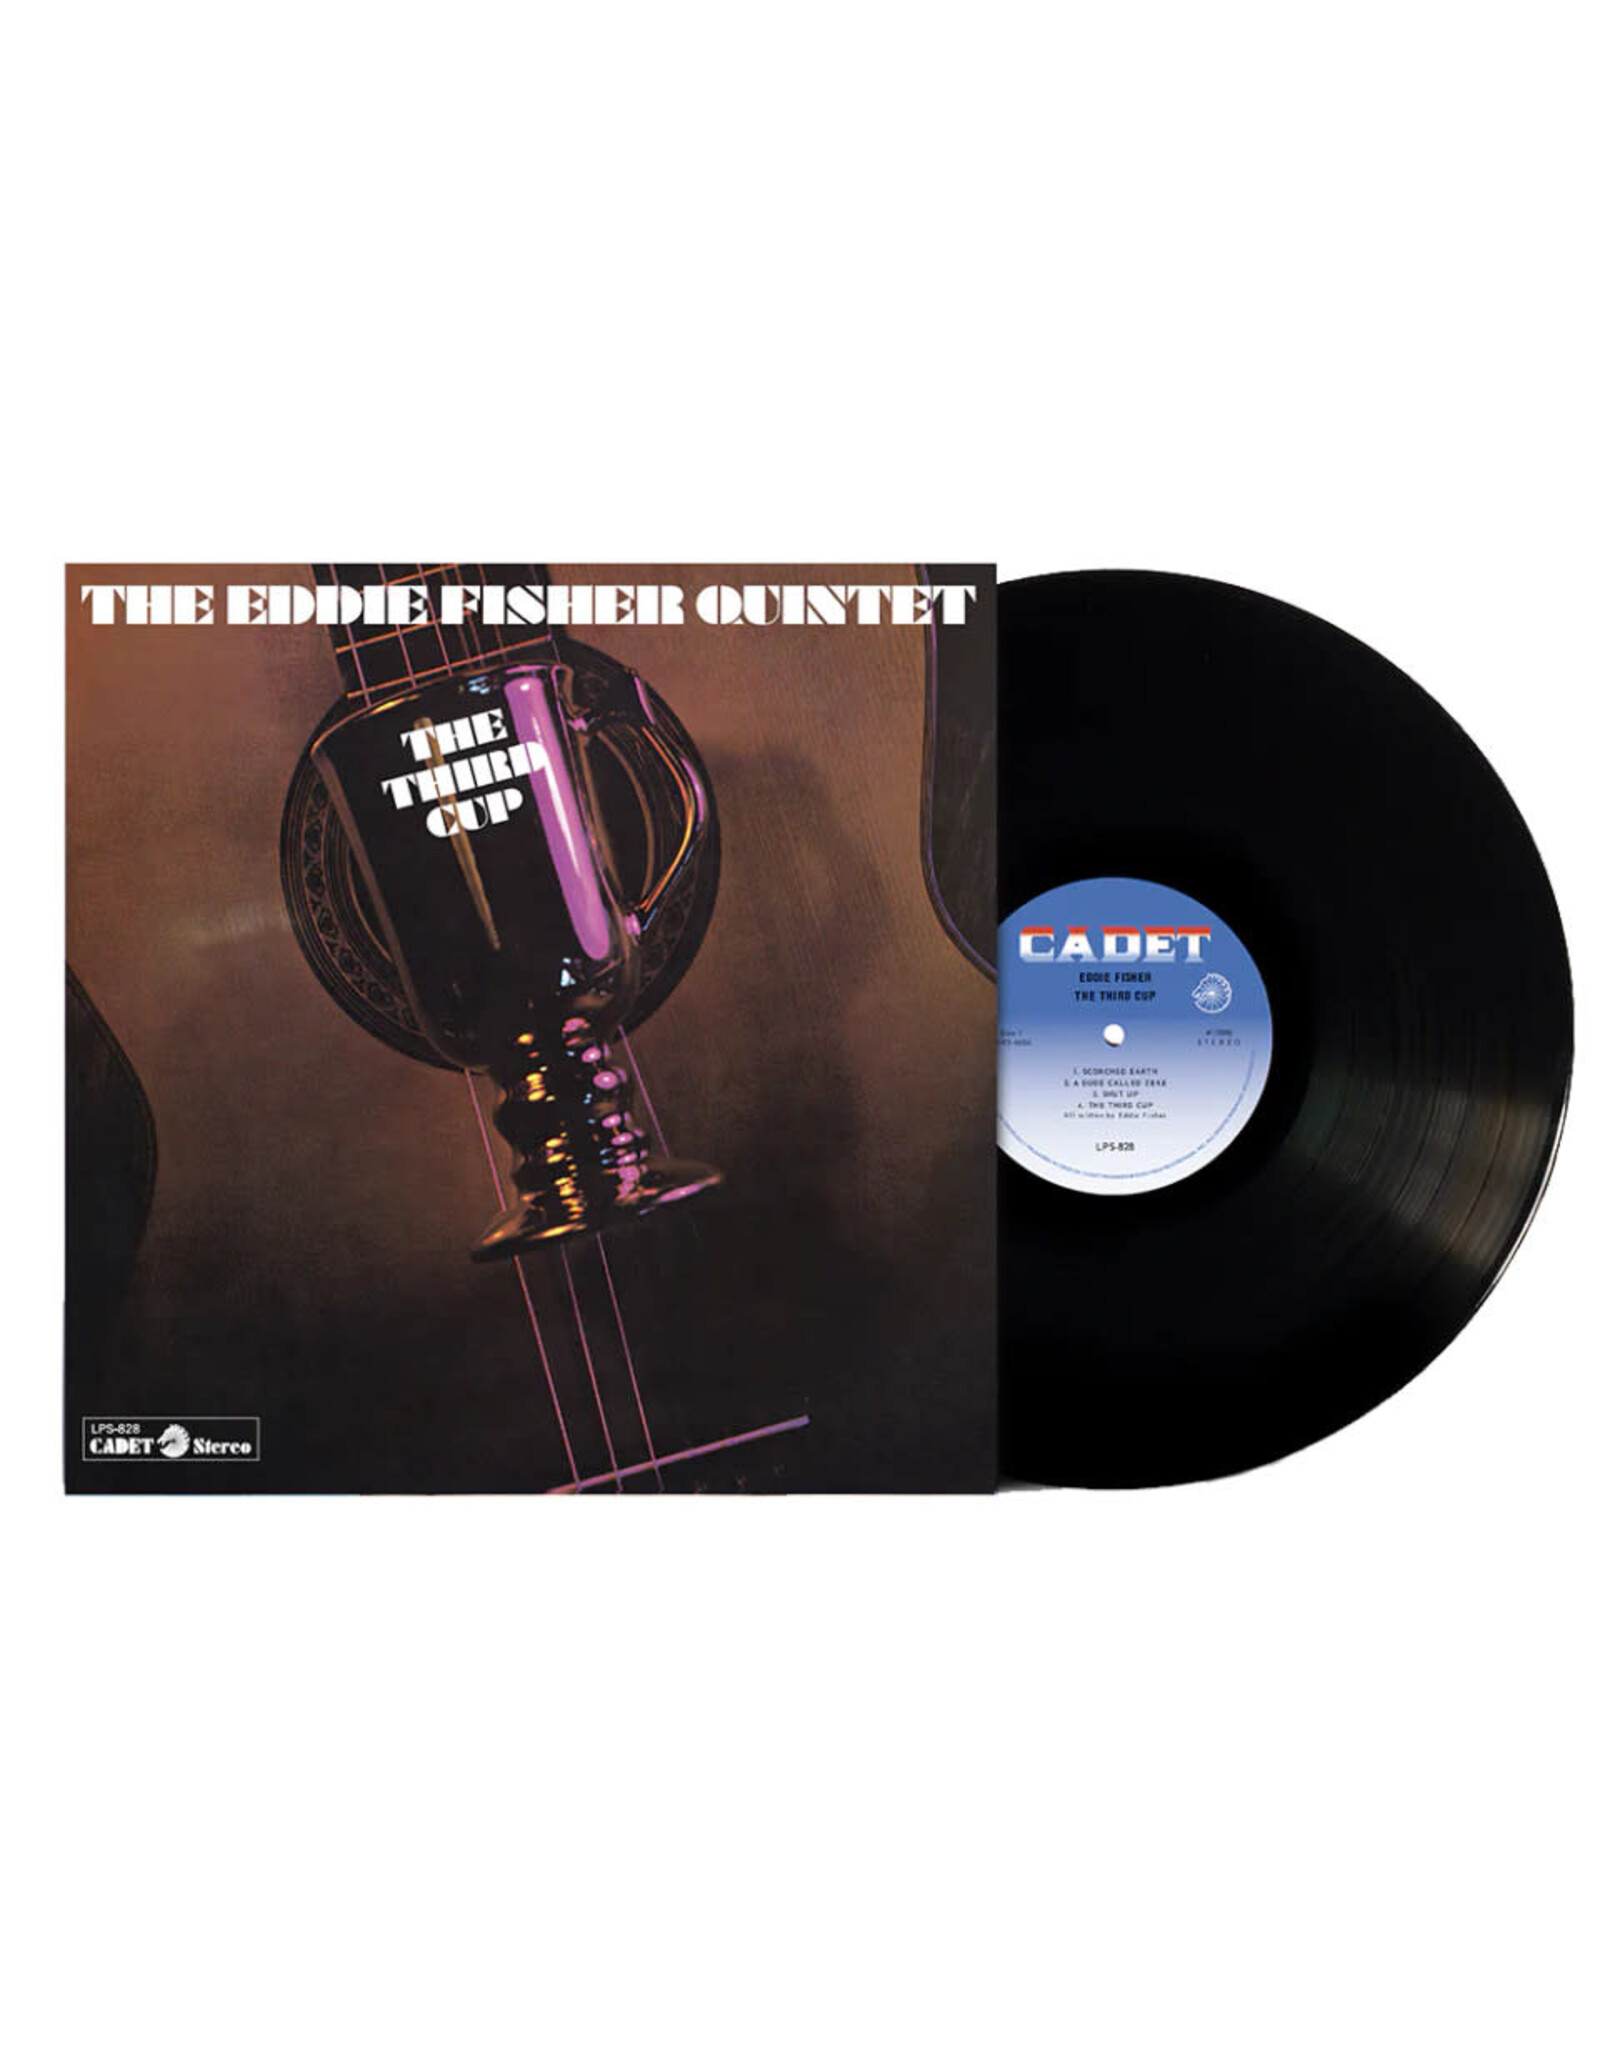 Verve Fisher, Eddie Quintet: The Third Cup (Verve By Request) LP